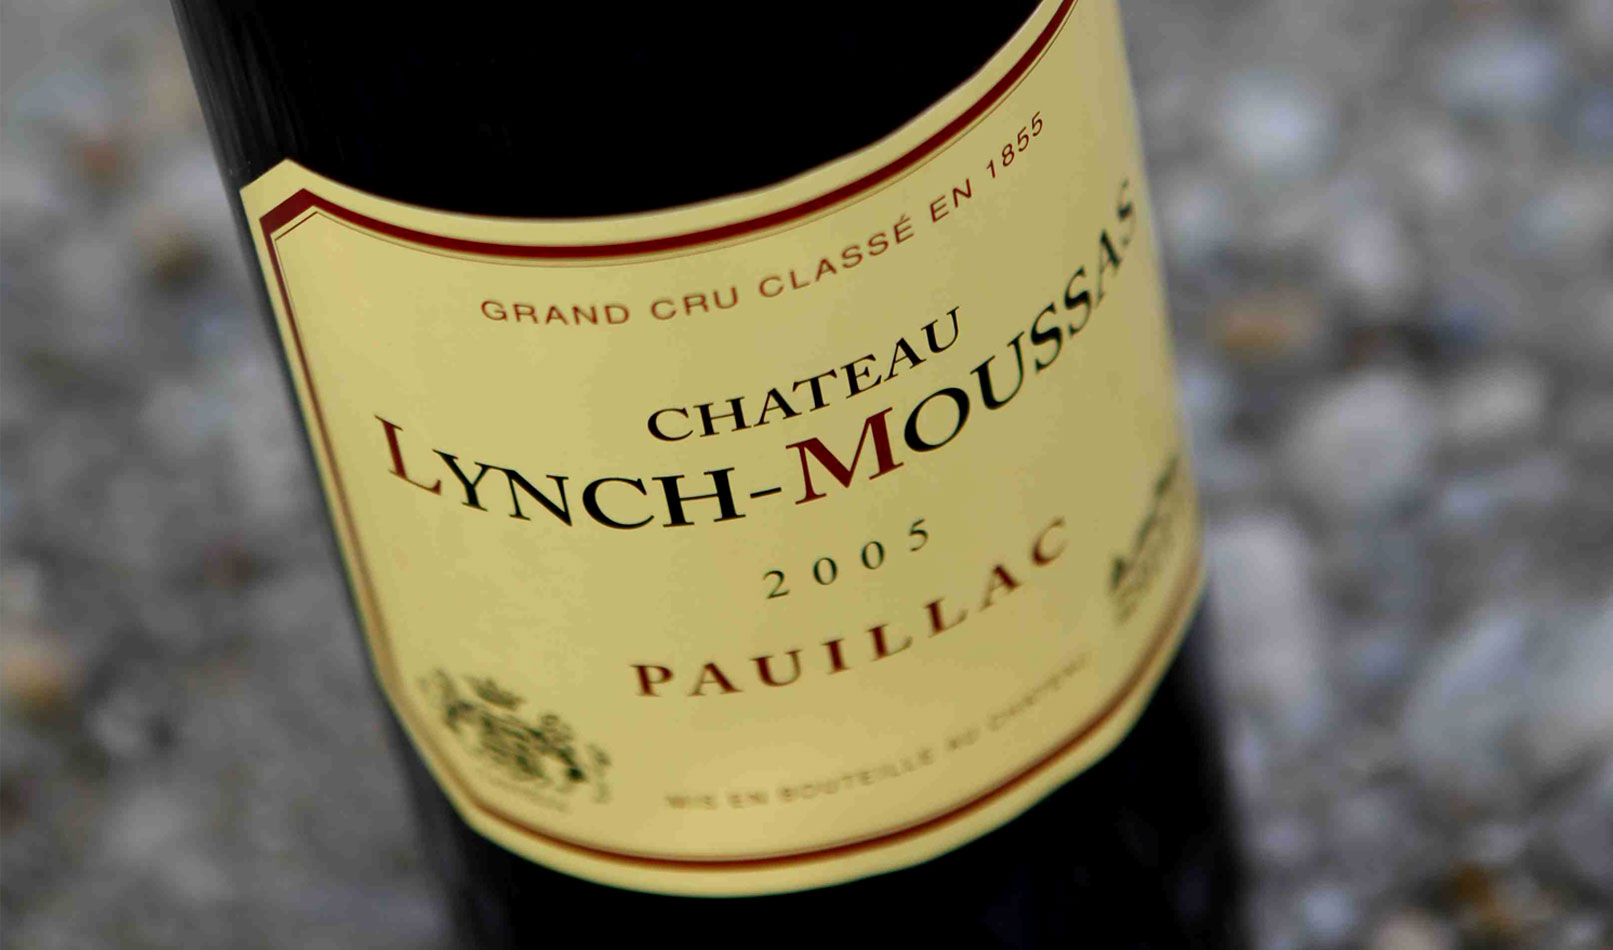 Château Lynch Moussas - Grand Cru classé Pauillac